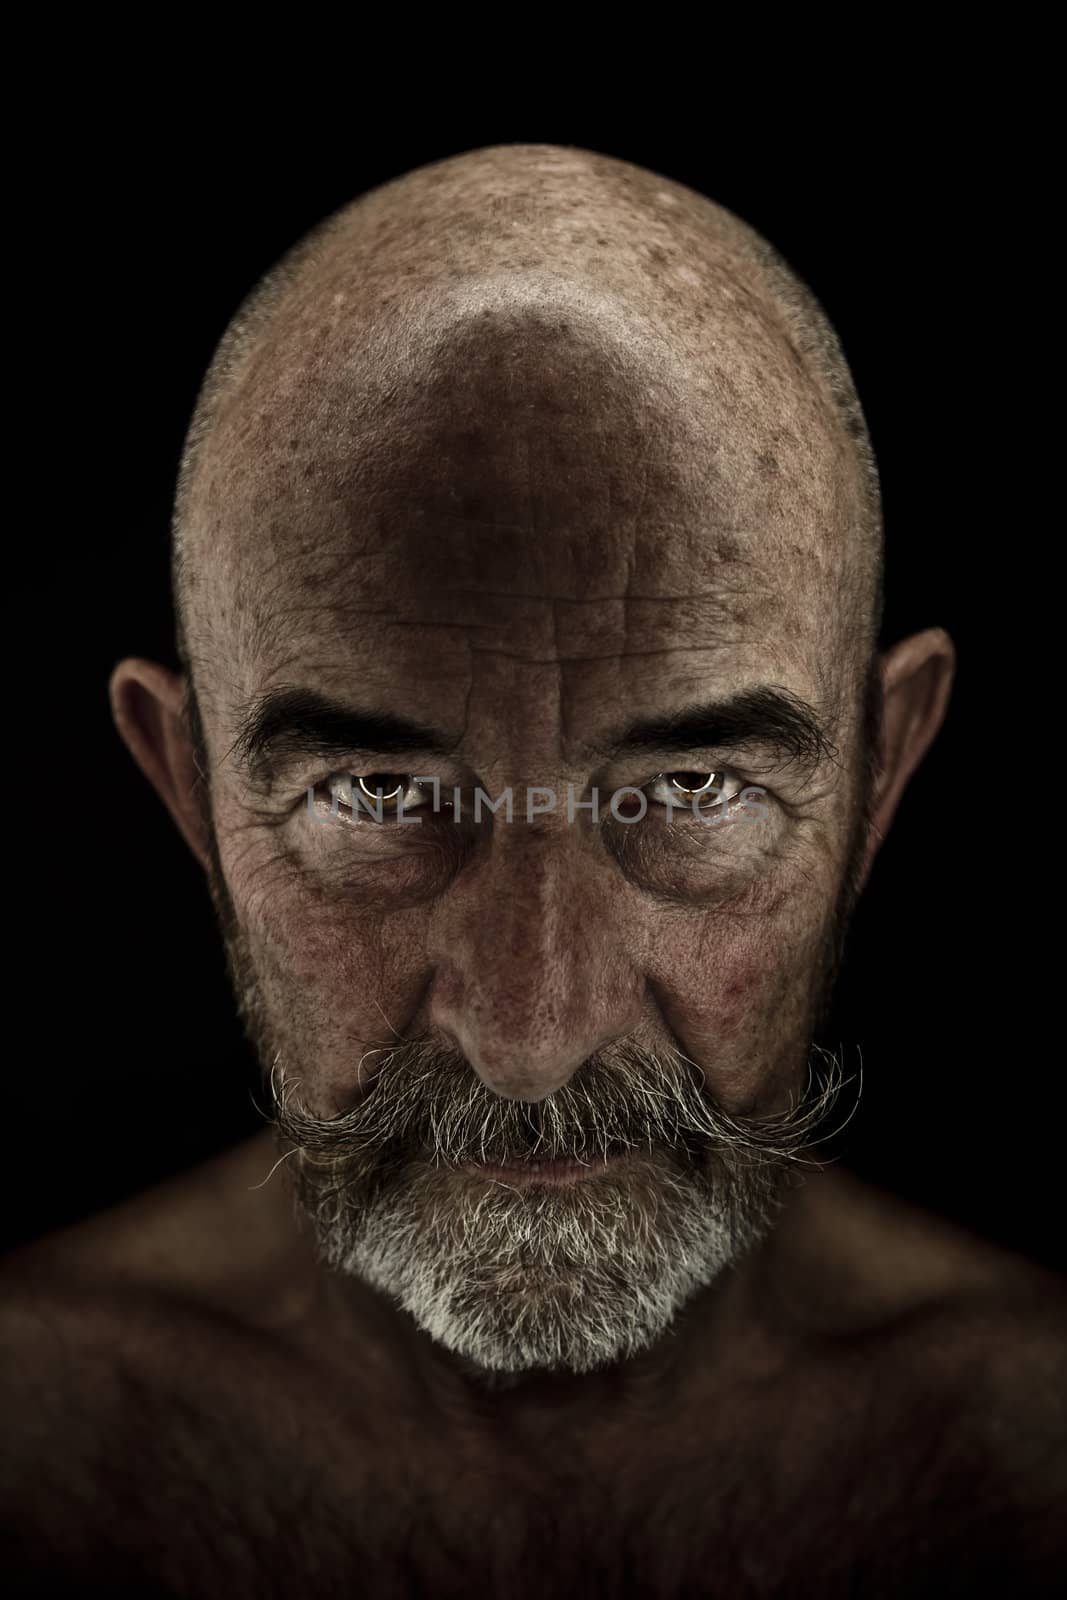 A strange old man with a grey beard